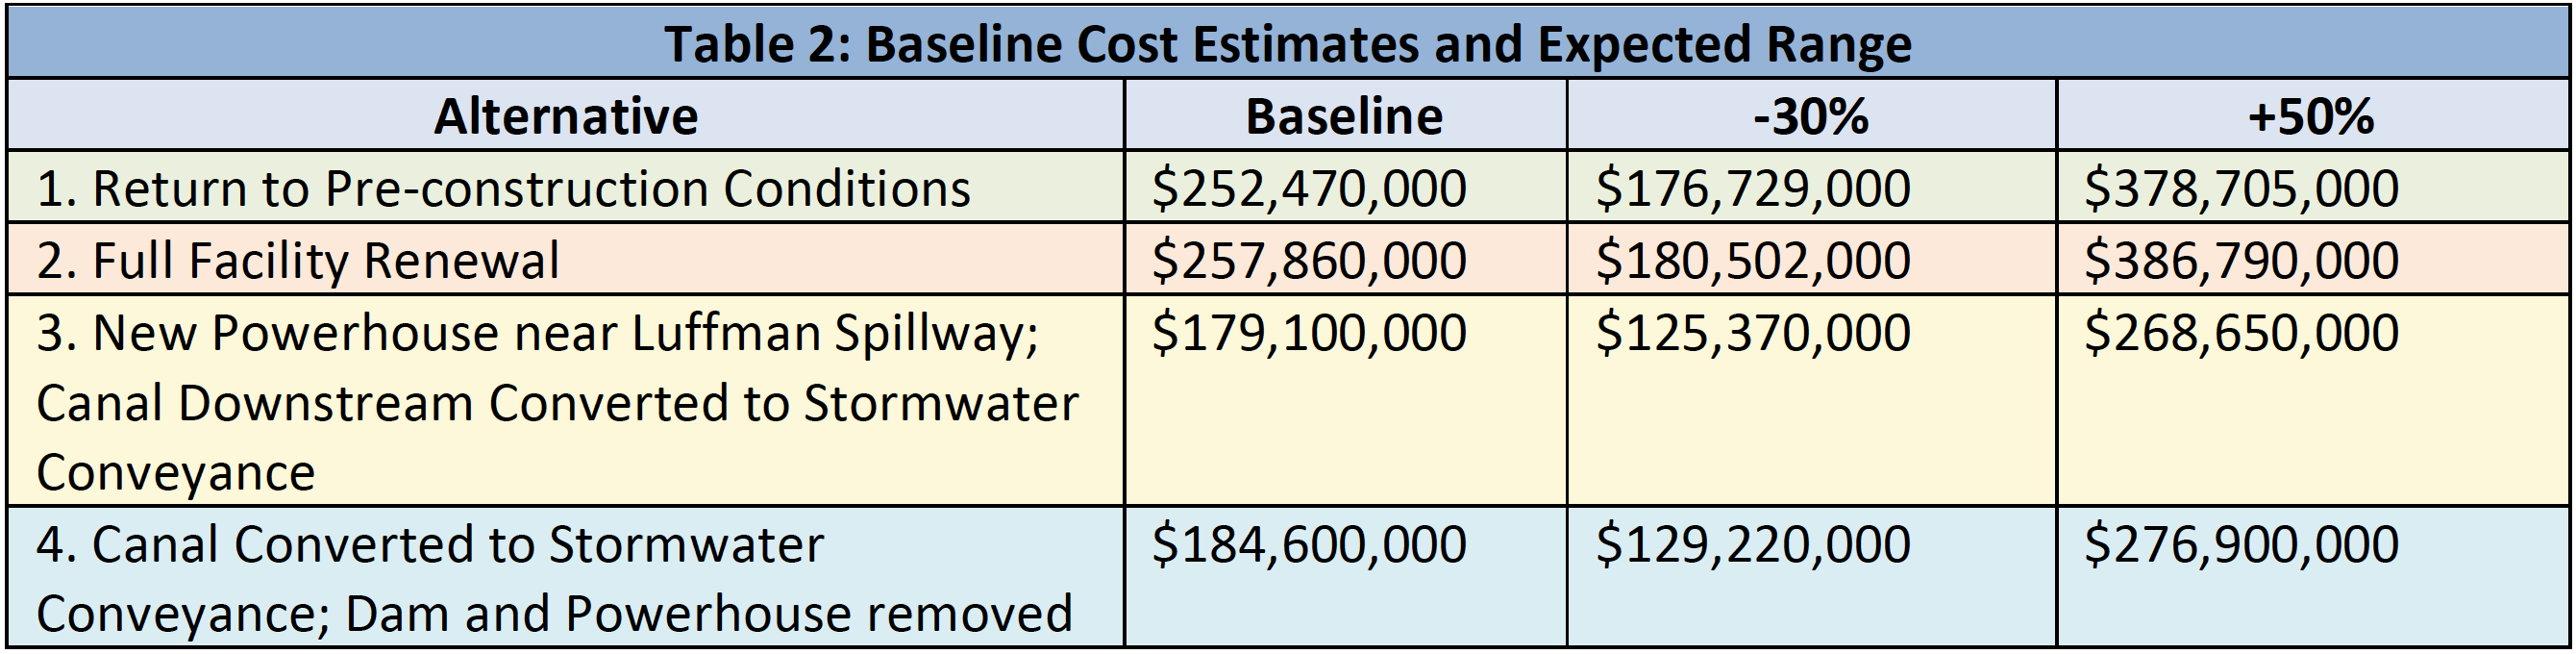 Leaburg Project Alternatives Baseline Cost Estimates